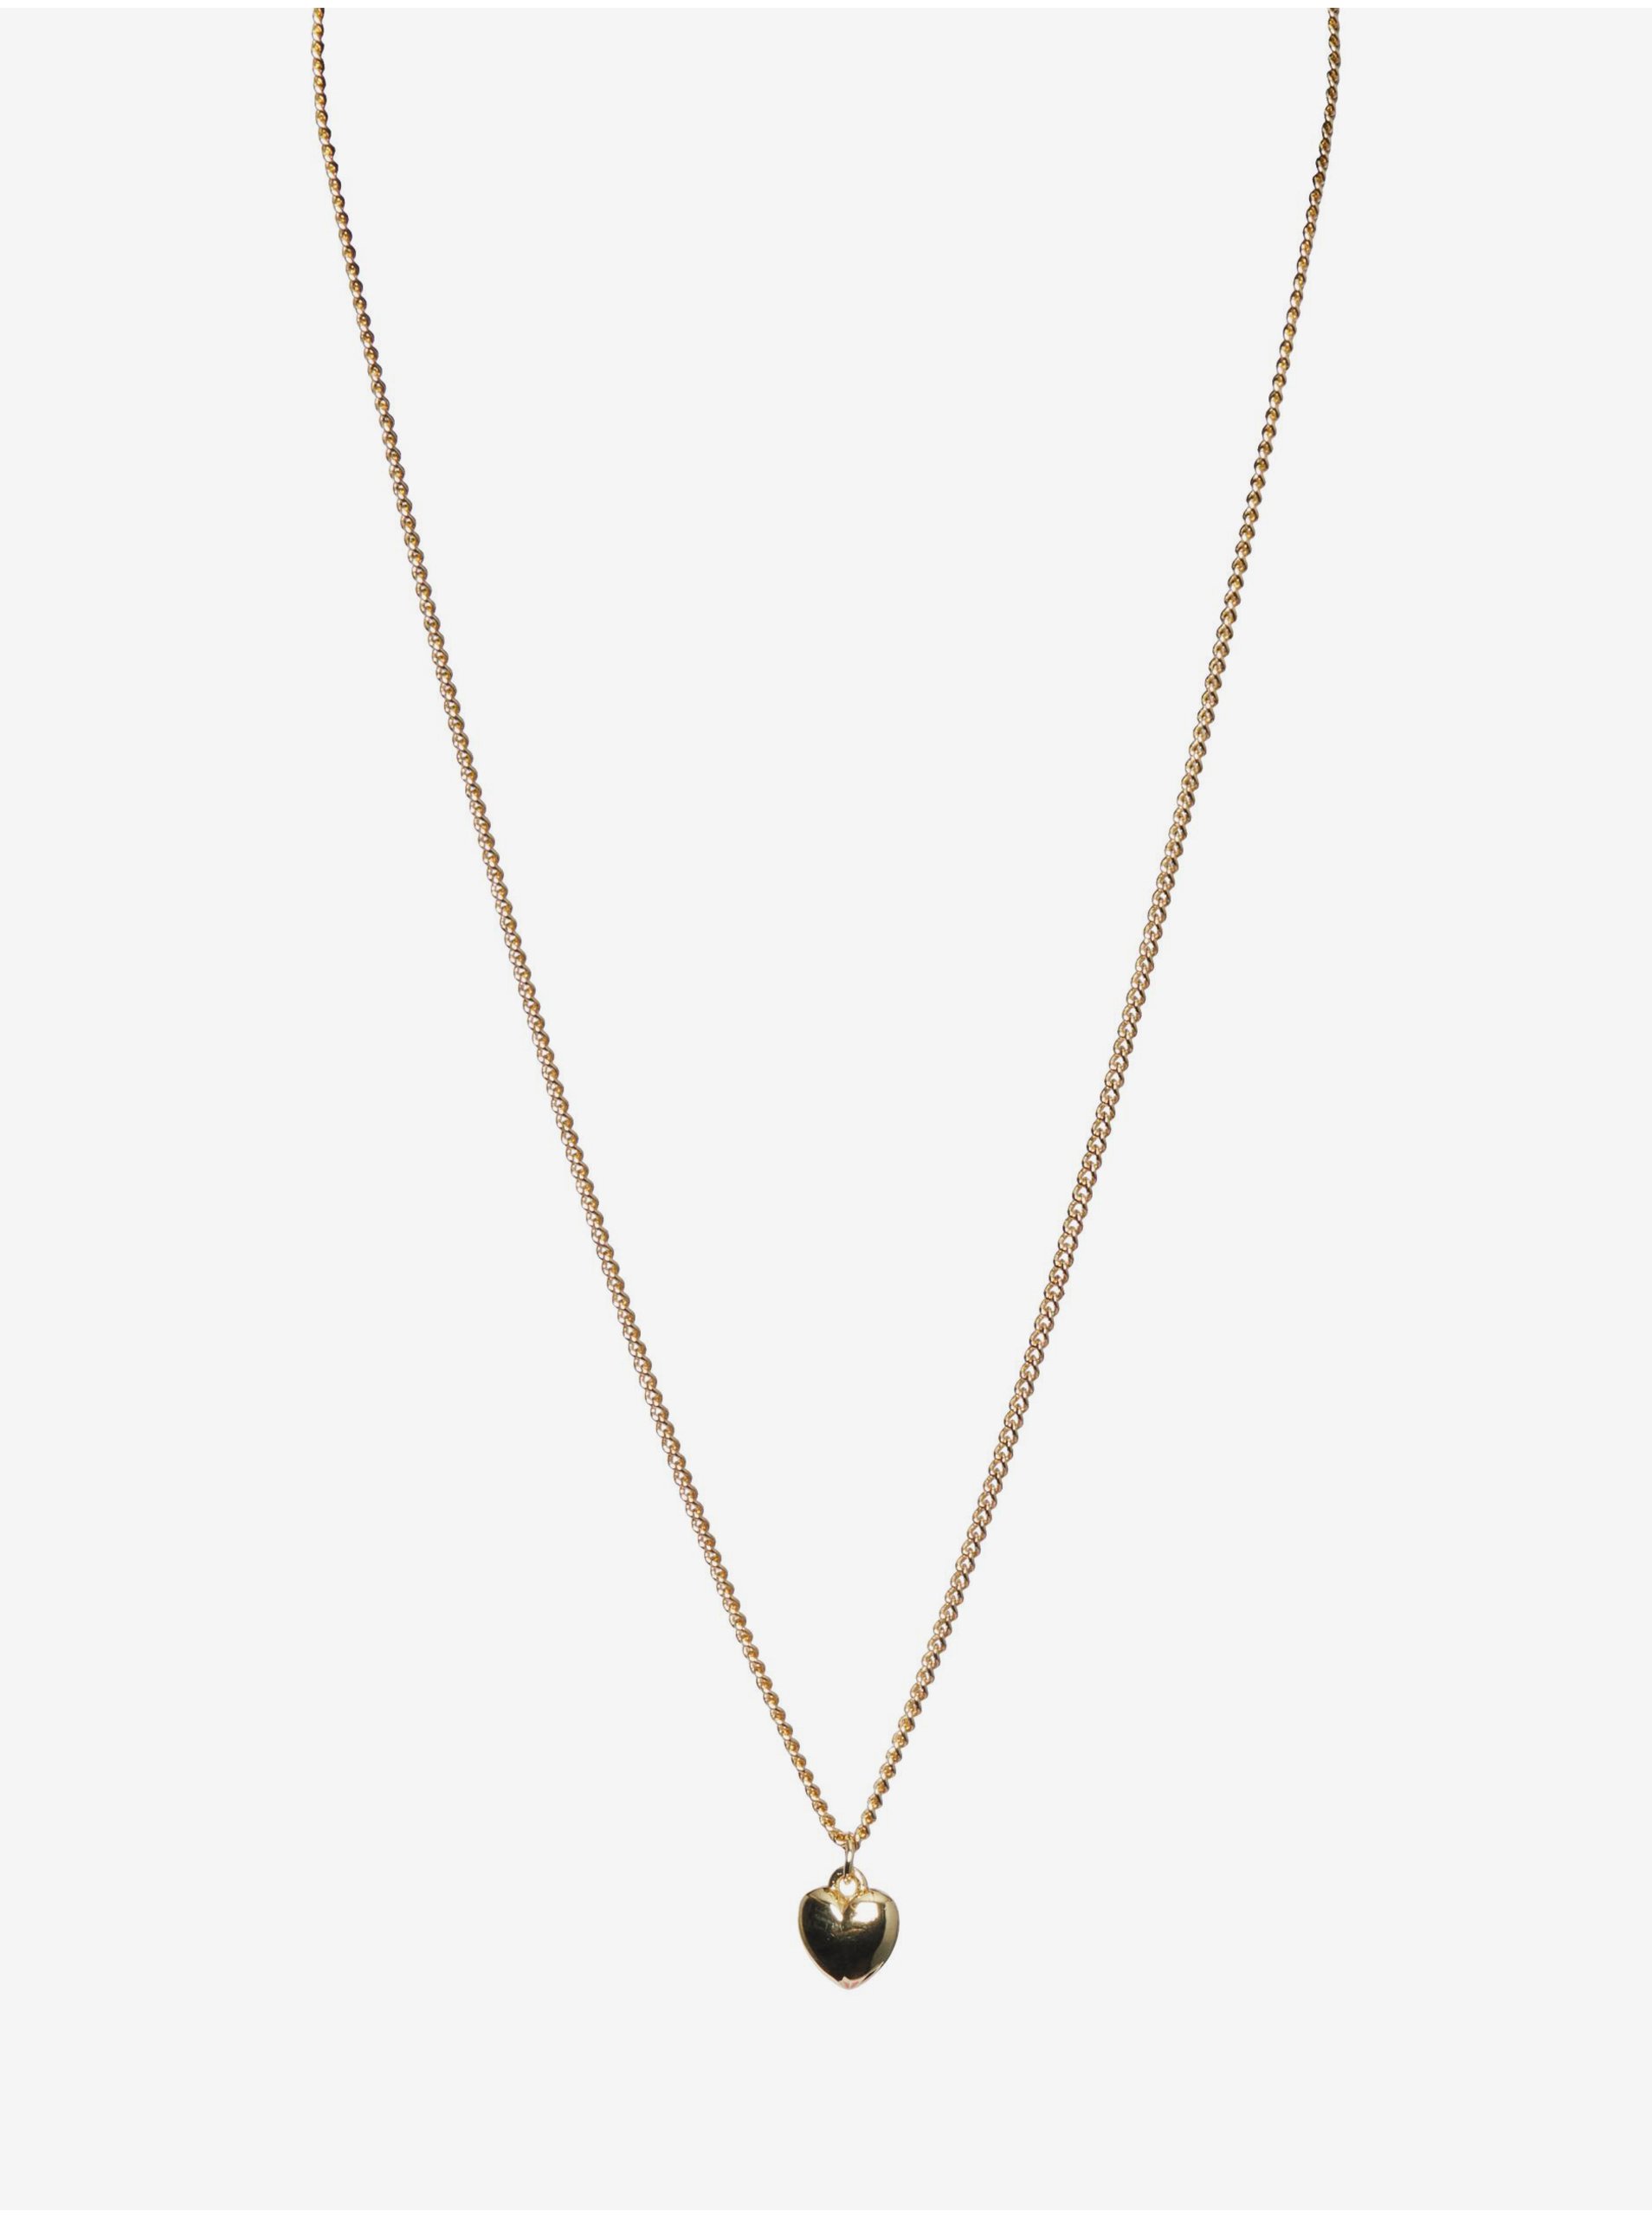 Women's necklace in gold color Pieces Betilde - Women's